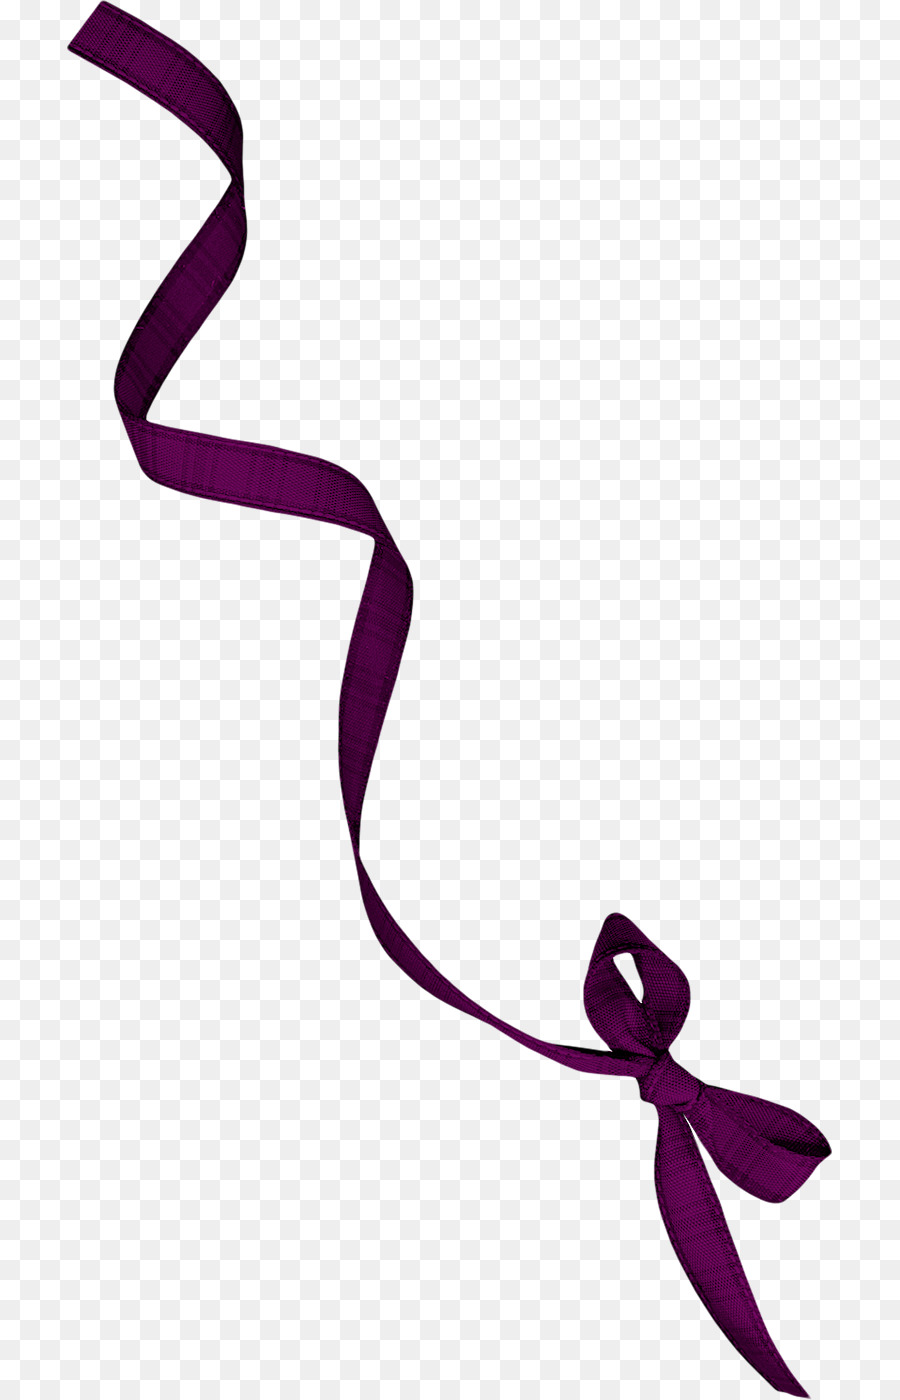 Ribbon Purple - Beautiful dark purple ribbons png download - 765*1400 - Free Transparent Ribbon png Download.